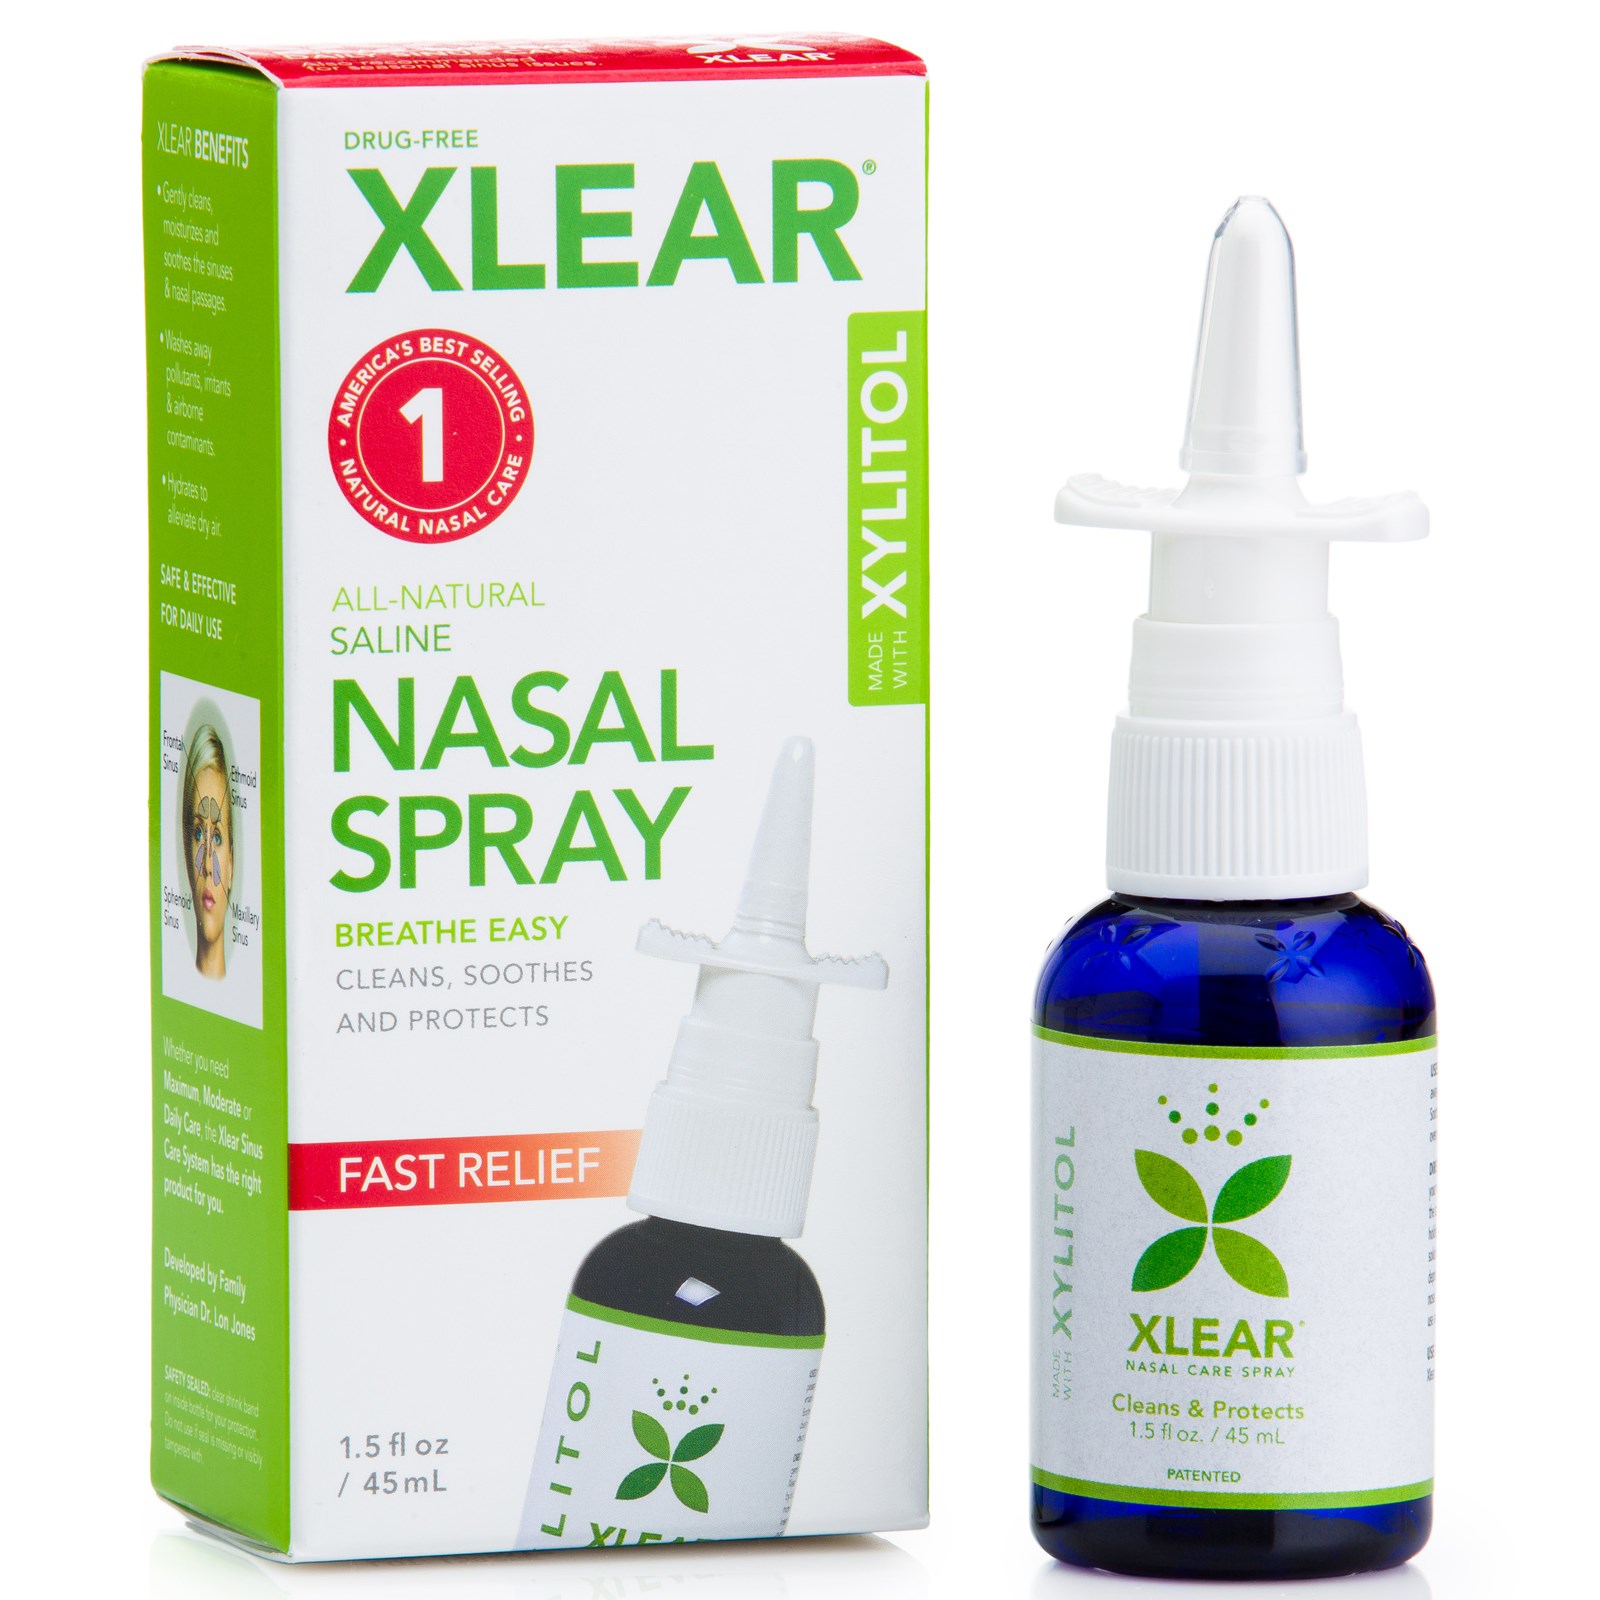 xclear_nasal spray